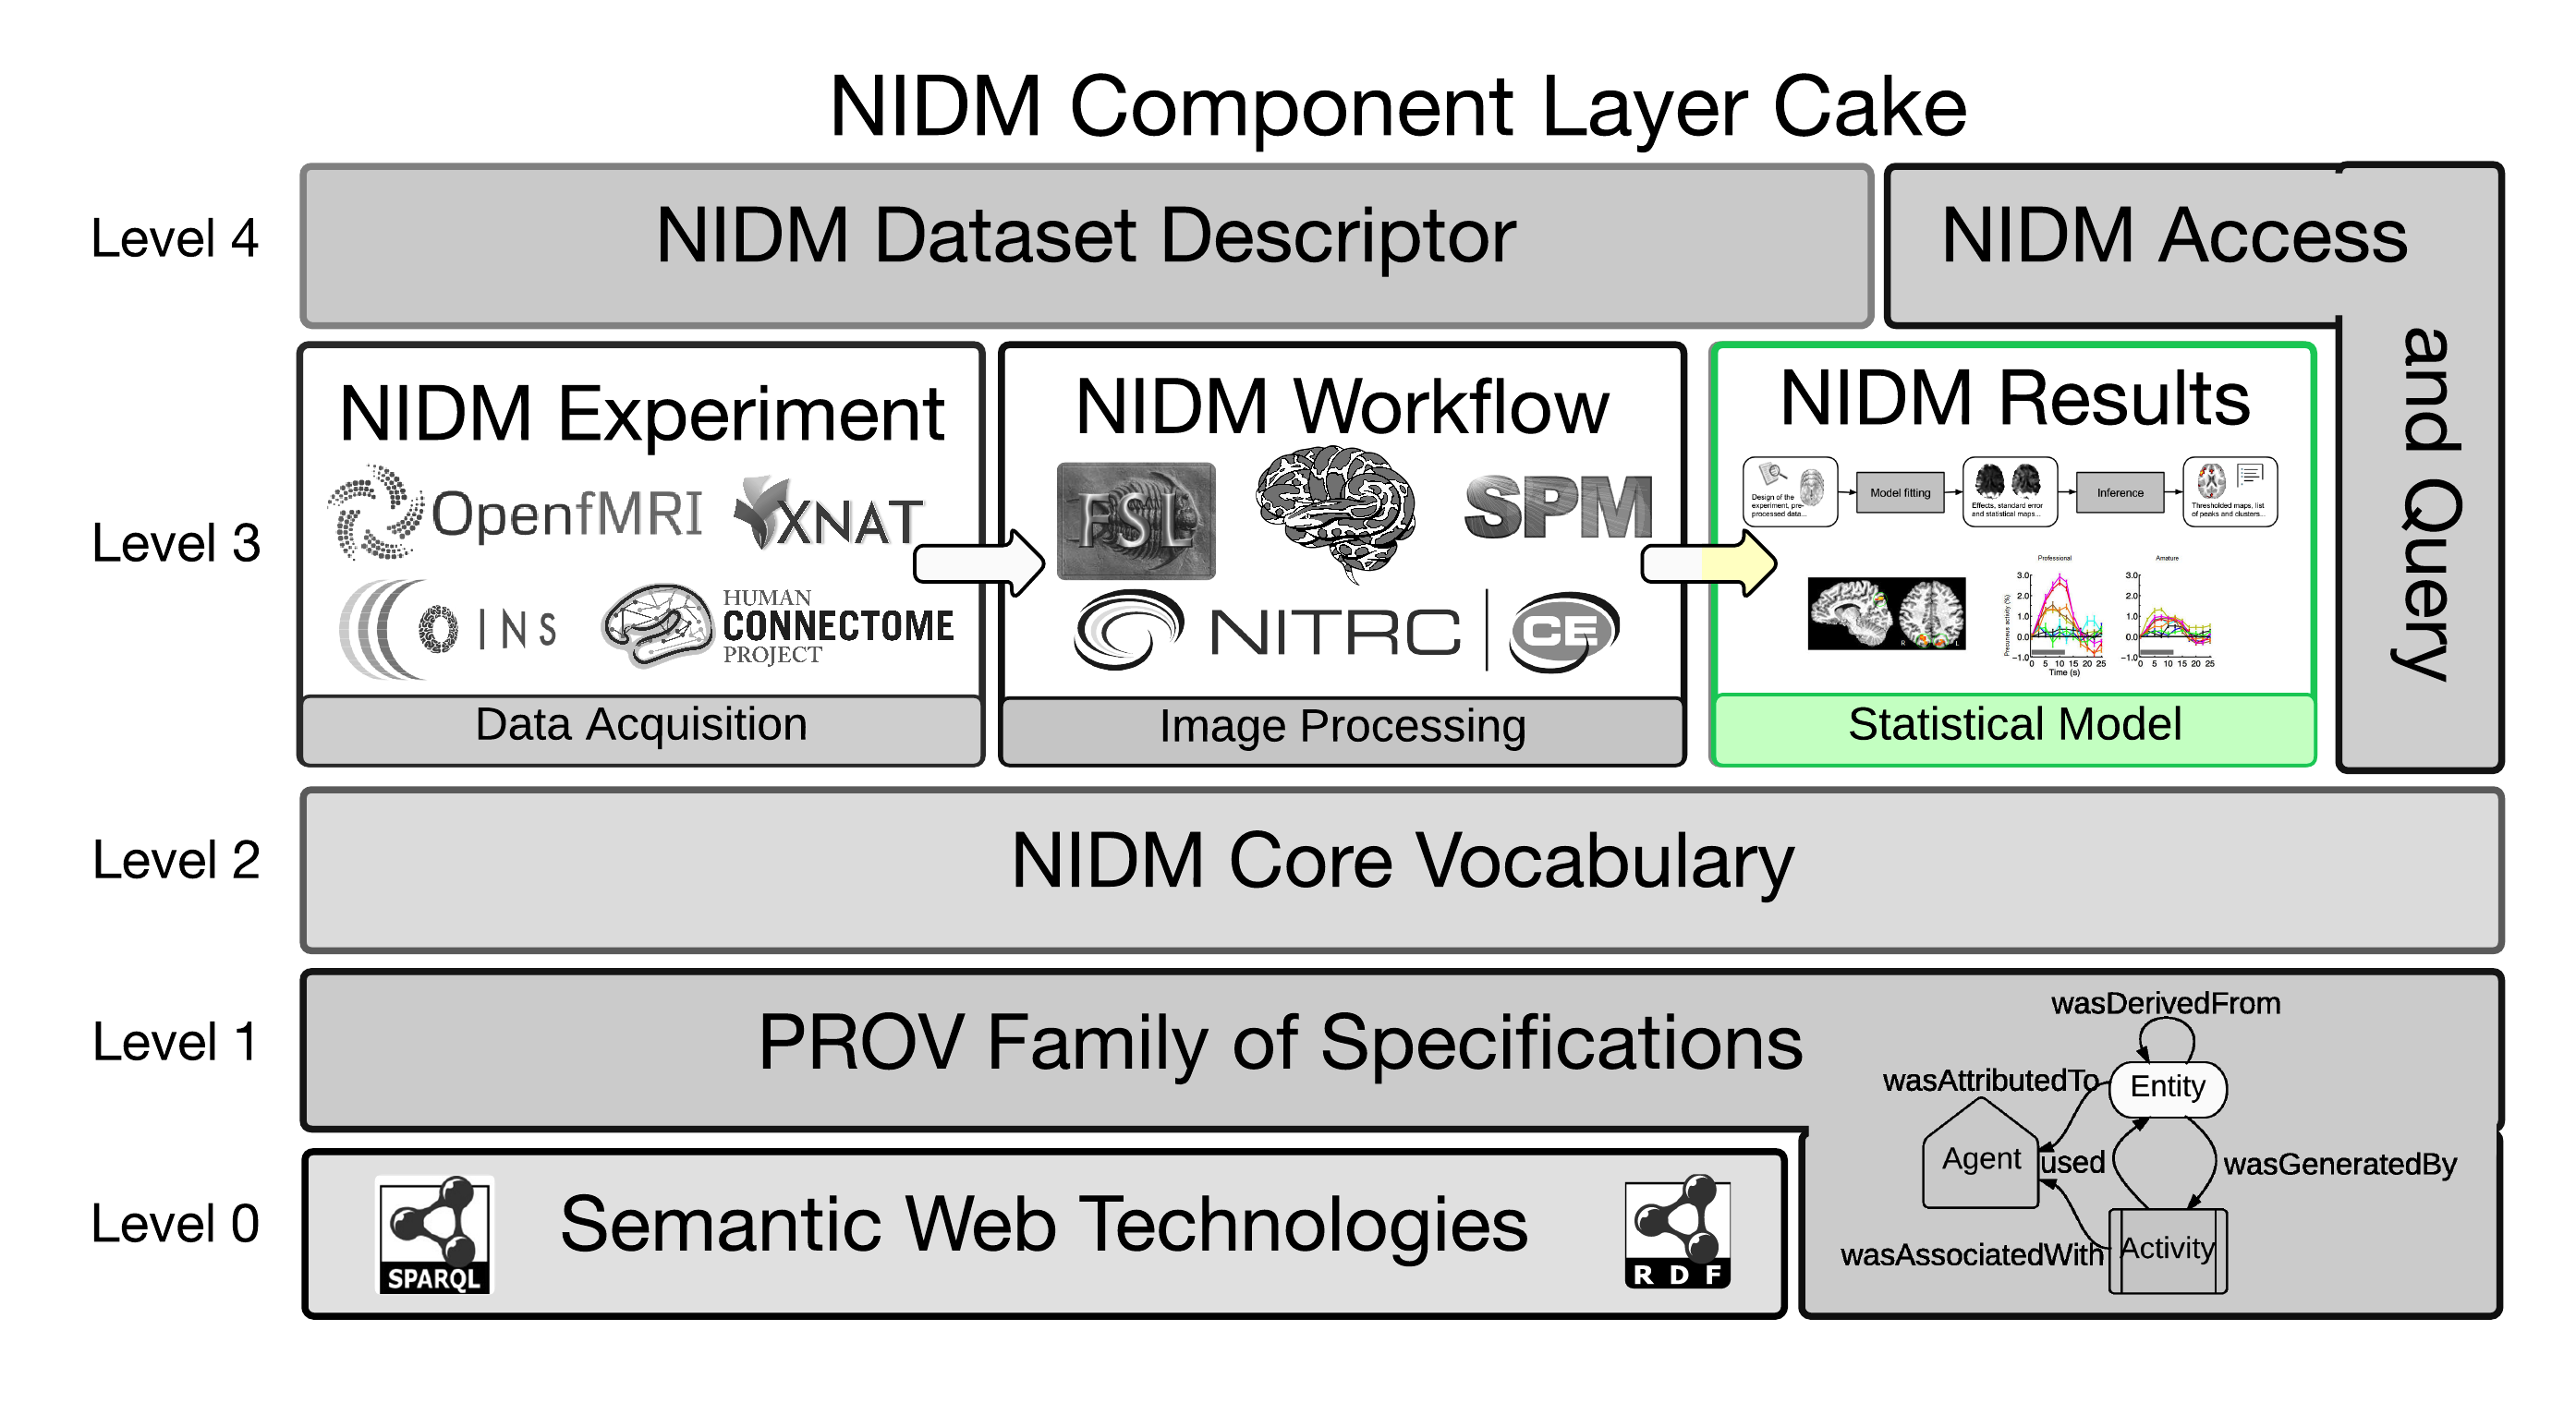 NIDM-Results as part of NIDM